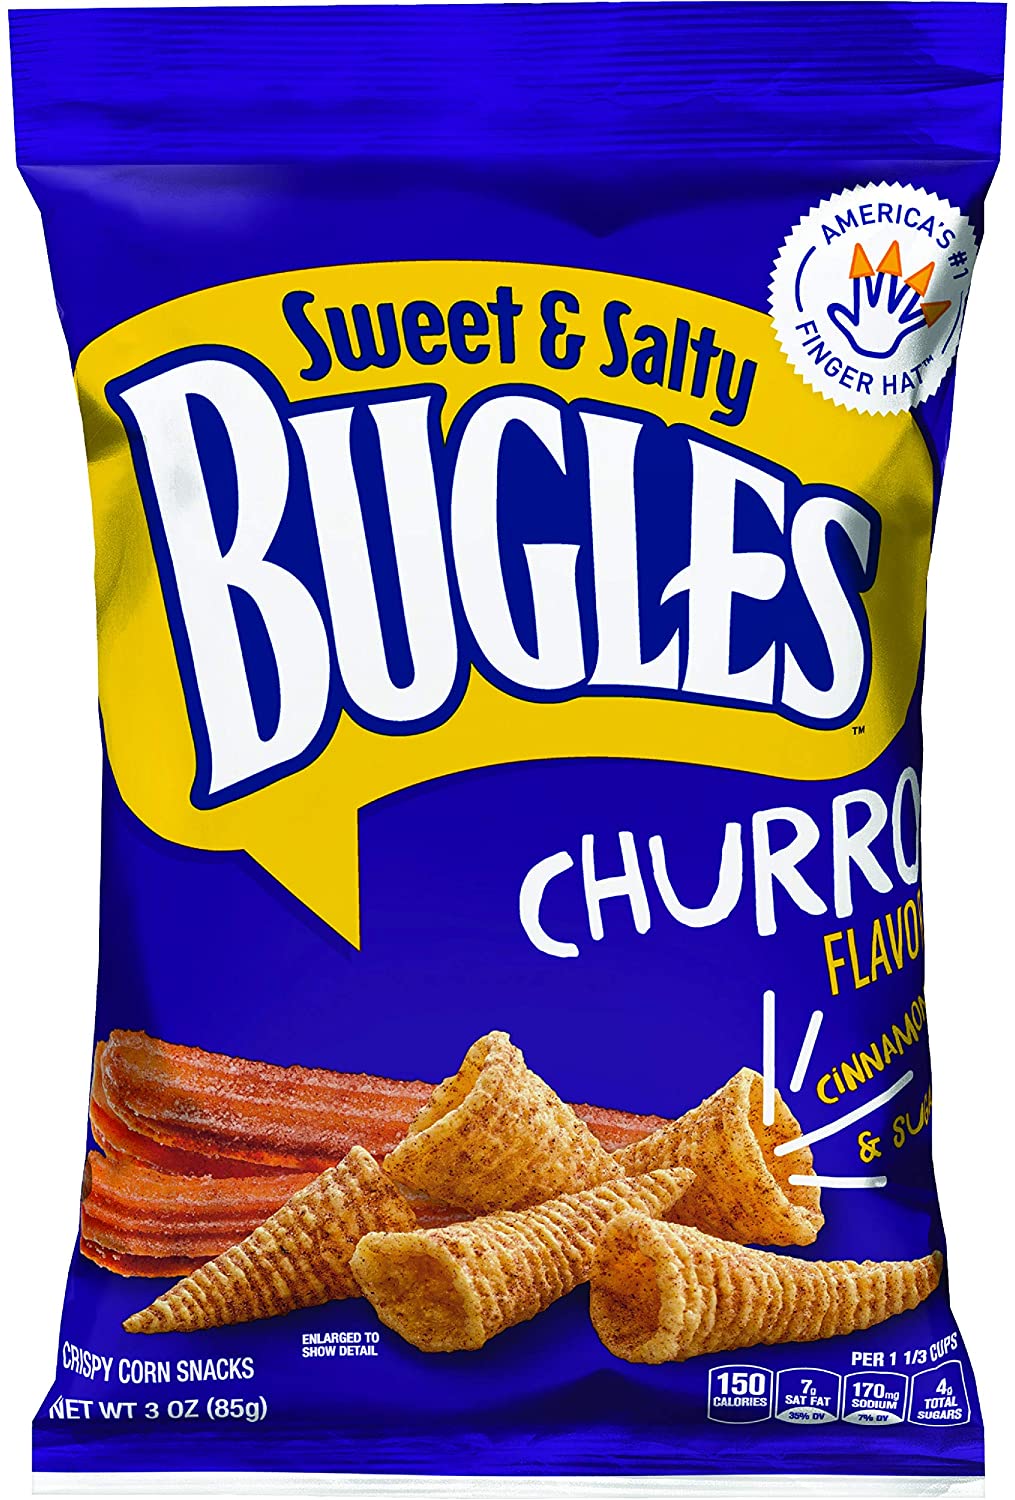 Bugles Sweet & Salty Churro (USA)